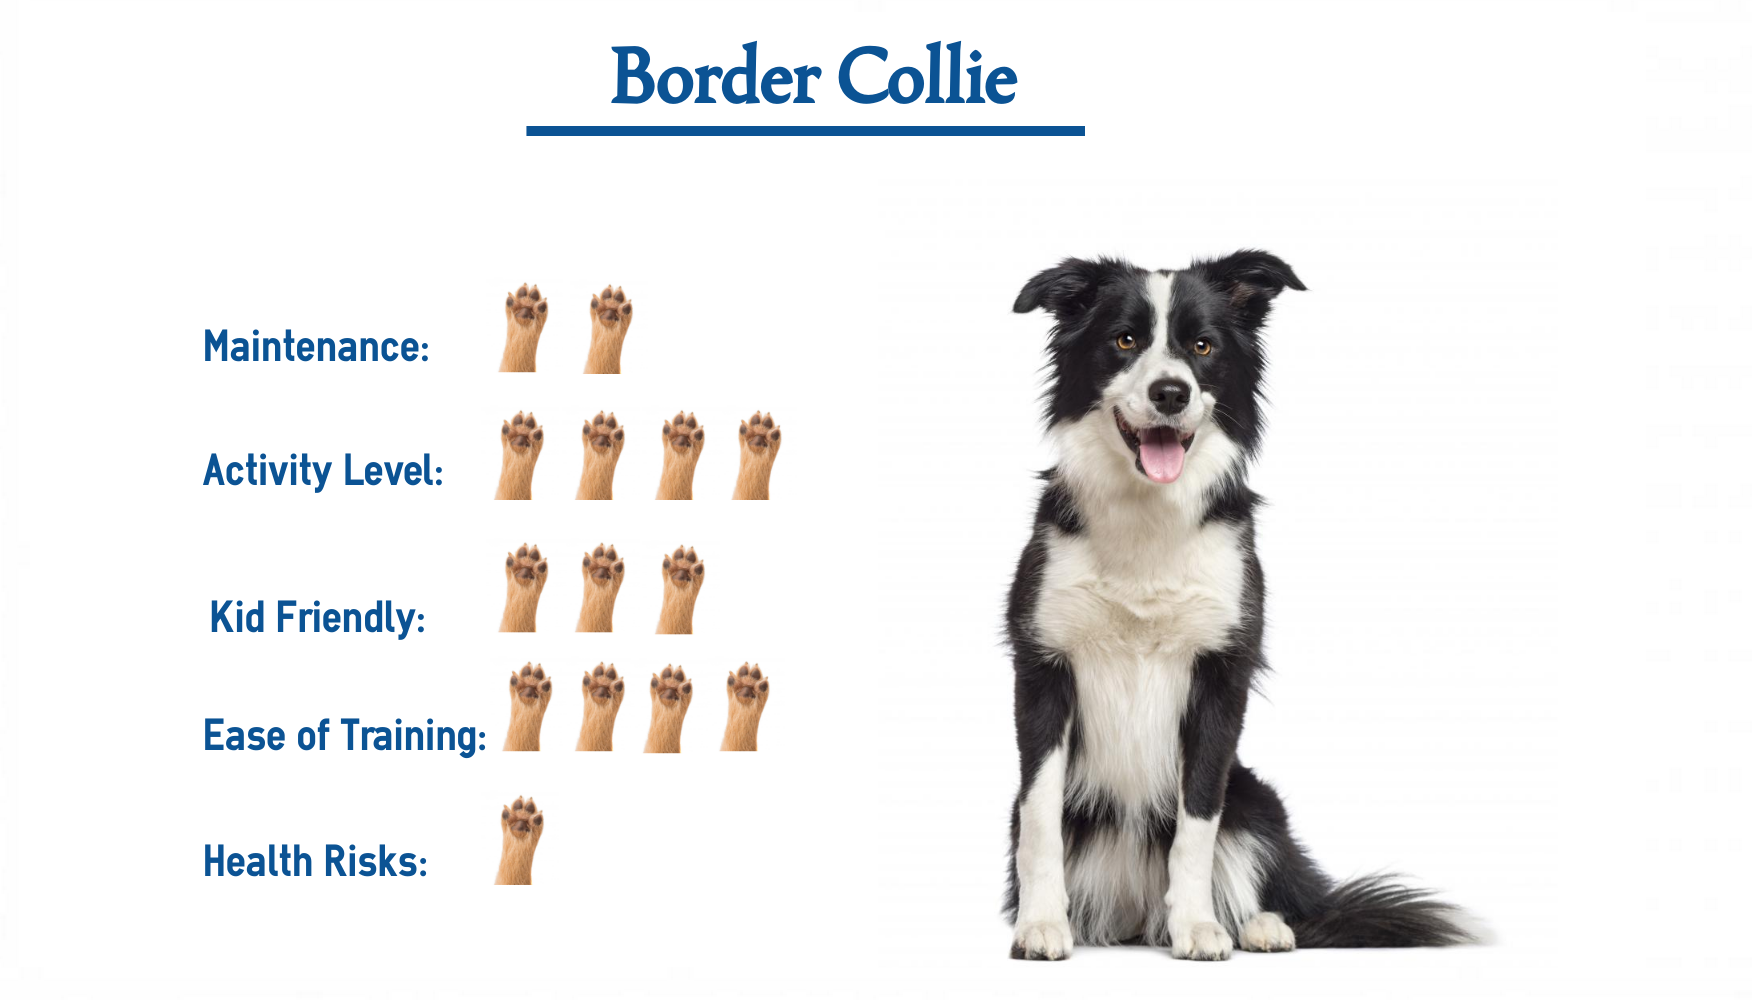 Border collie, Description, Temperament, & Facts